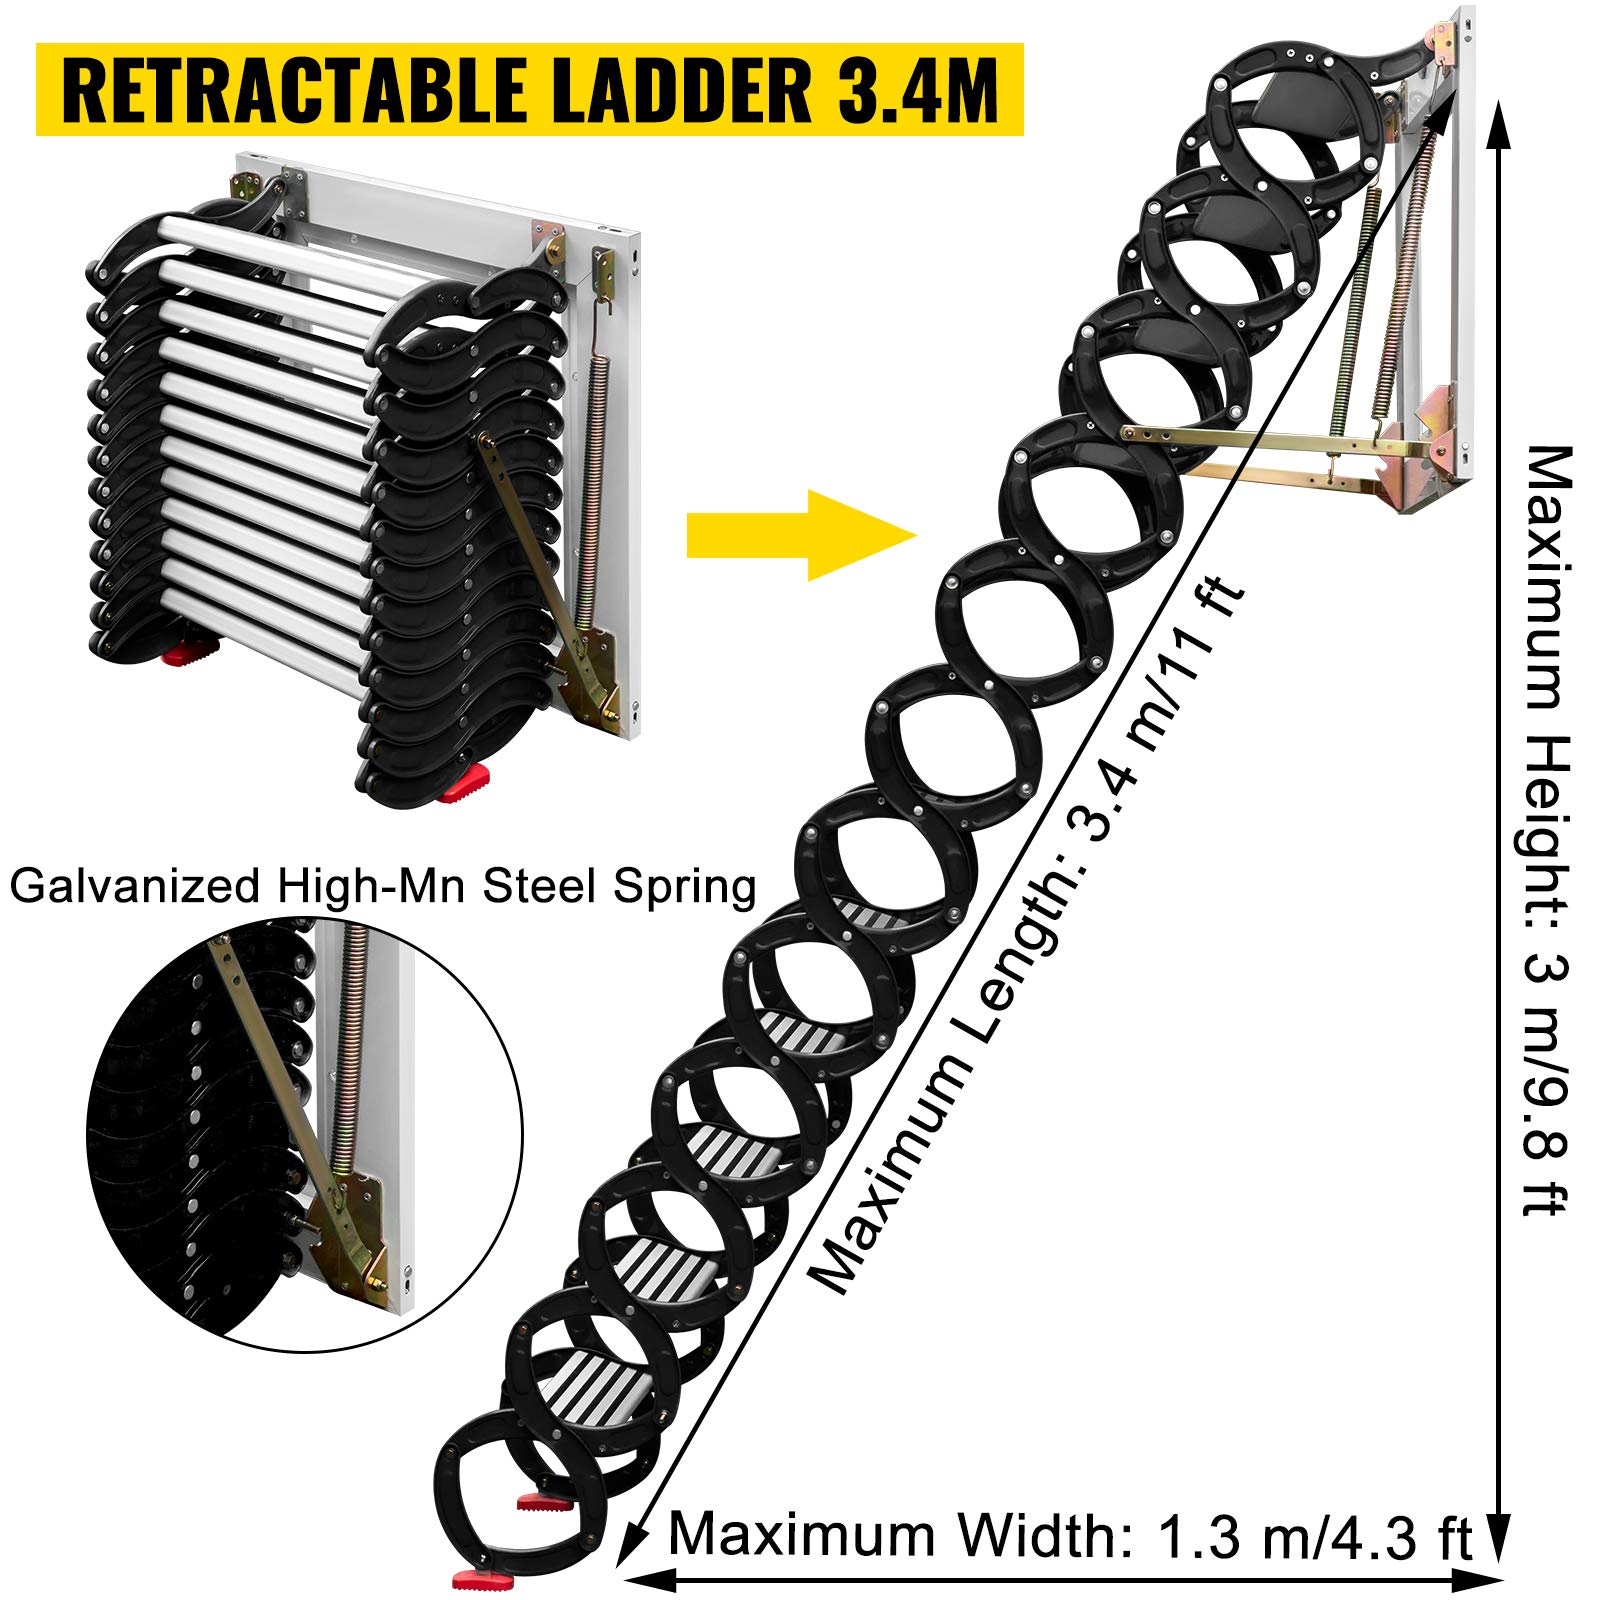 Attic Ladder Ceiling Ladder Attic Stairs